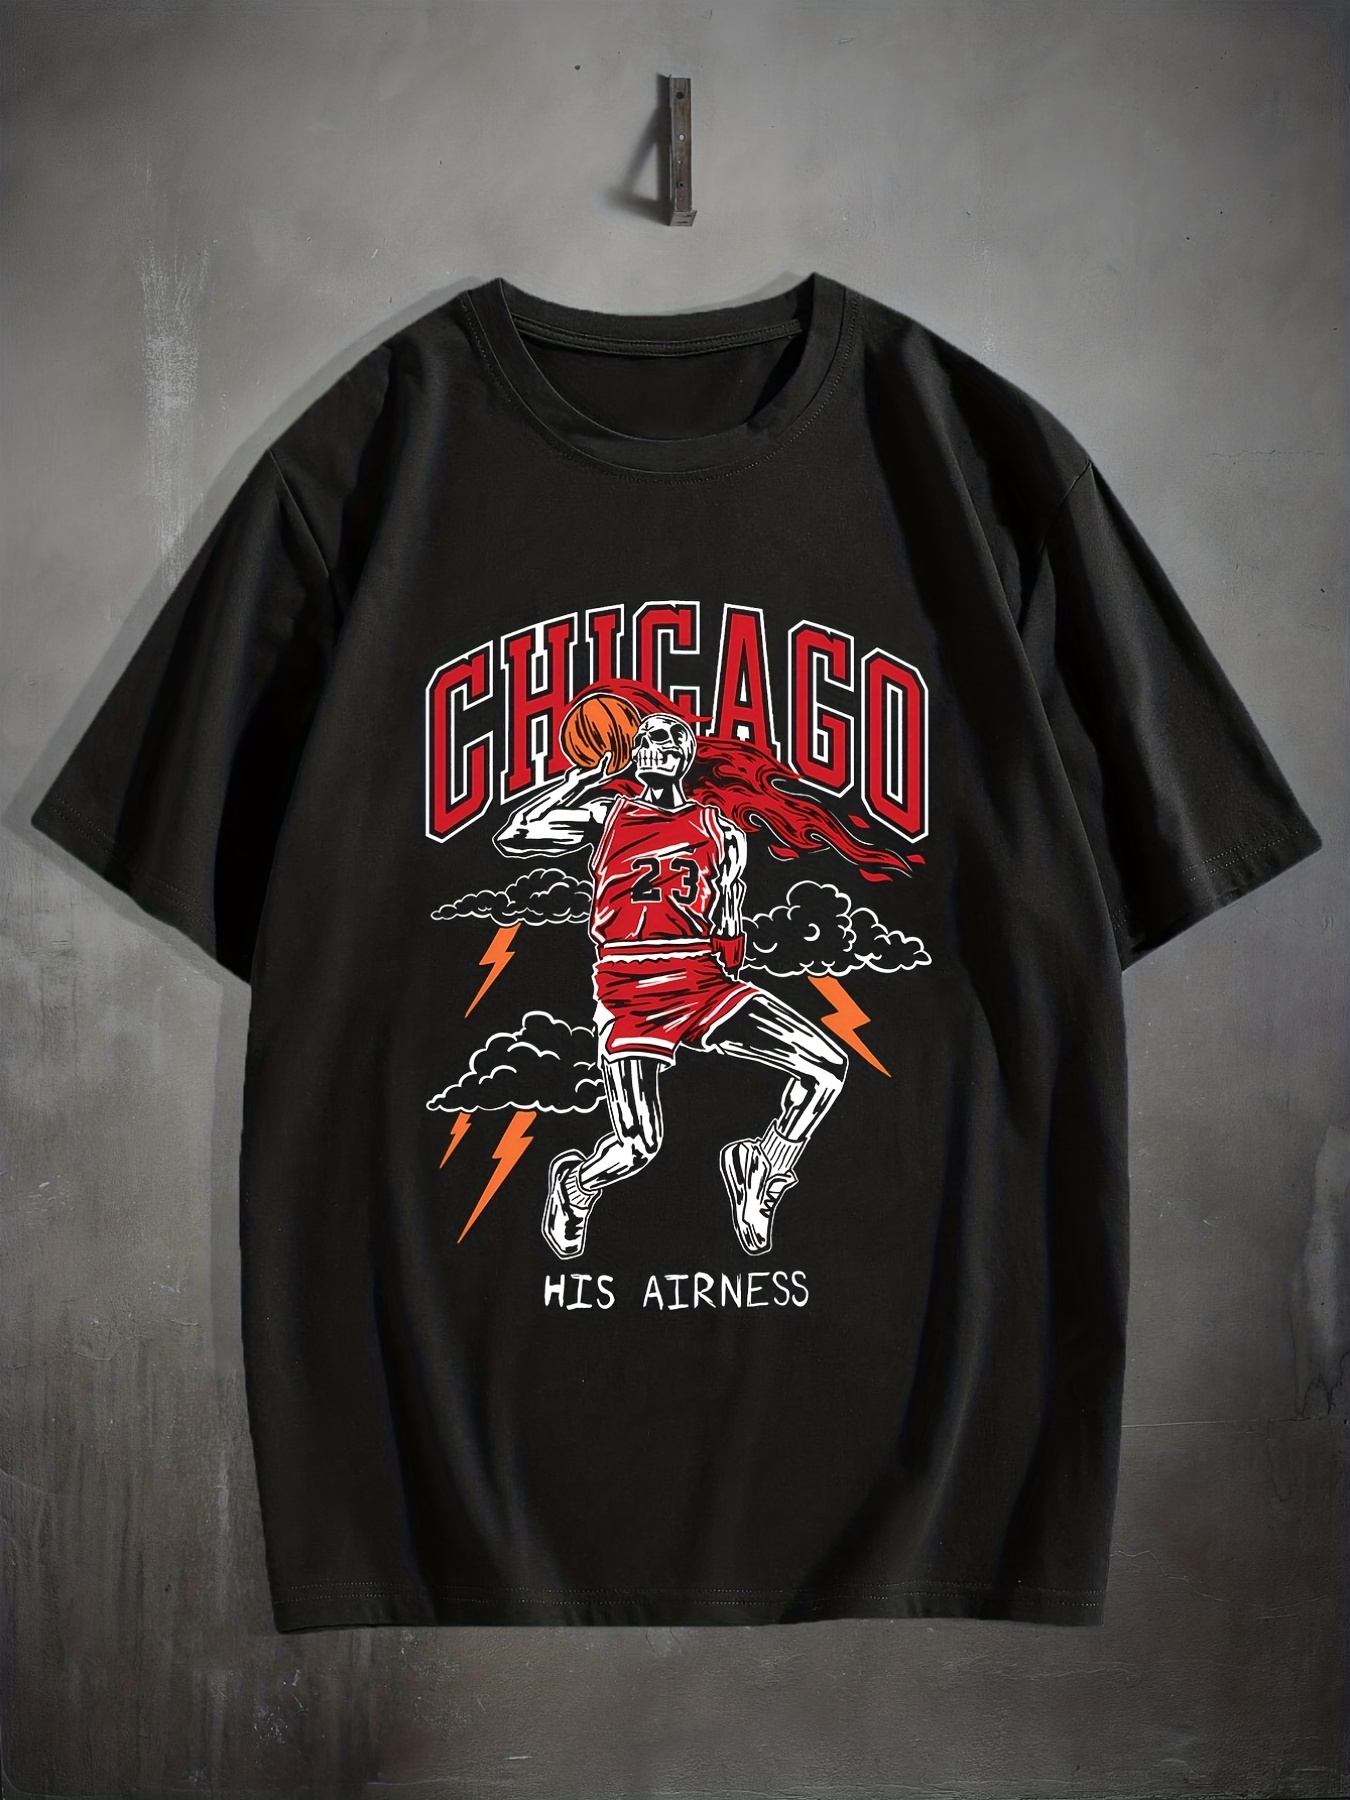 Nike Chicago Bulls - Rojo - Camiseta Baloncesto Hombre